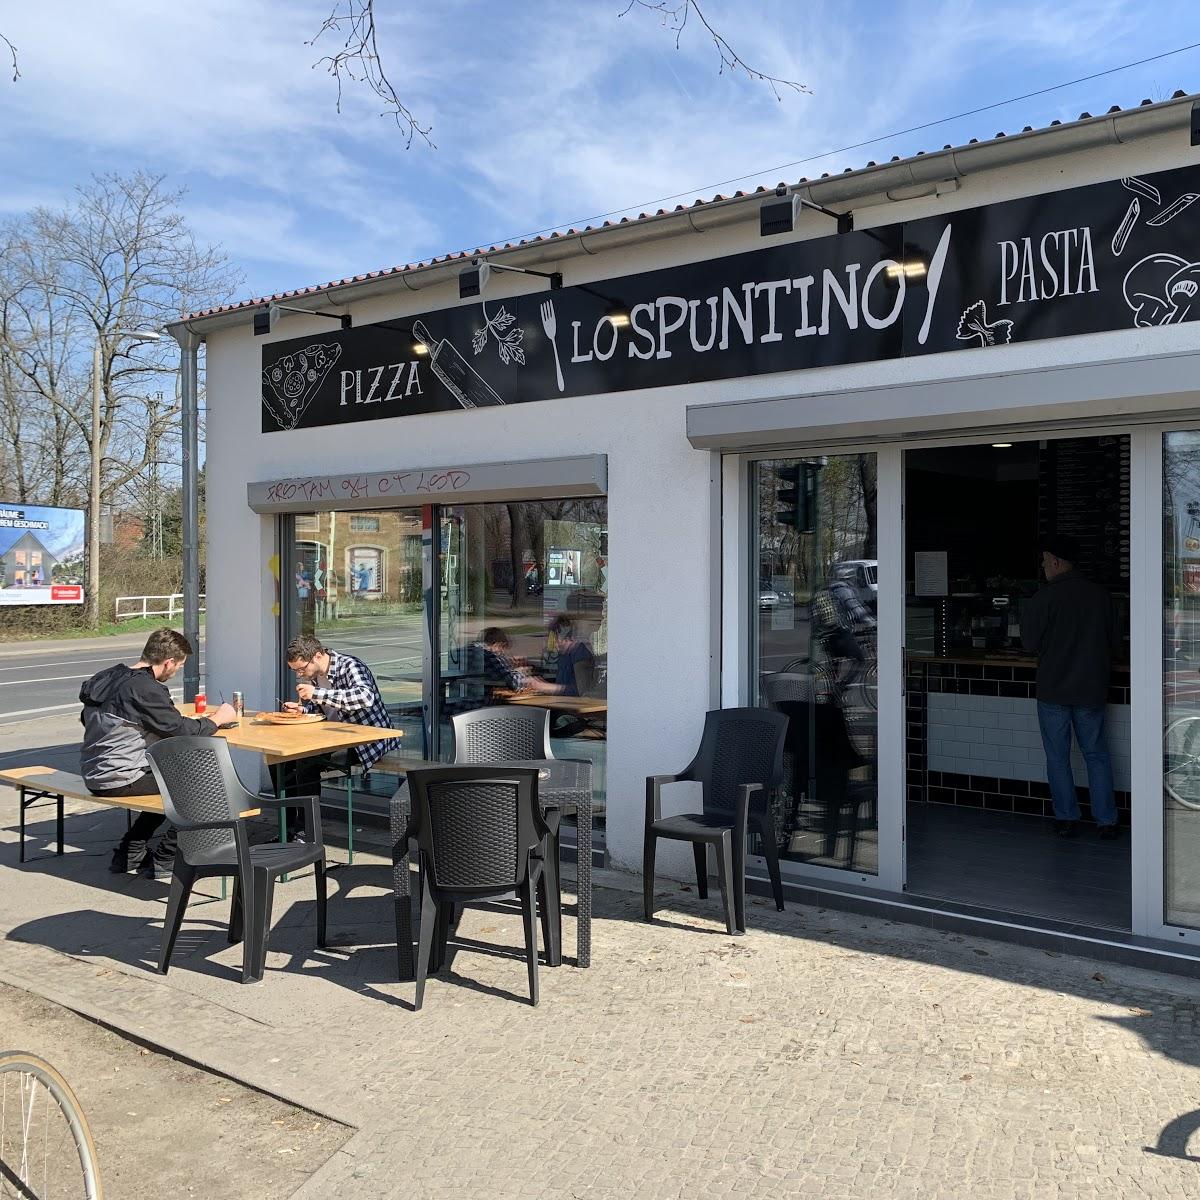 Restaurant "Lo Spuntino" in Potsdam